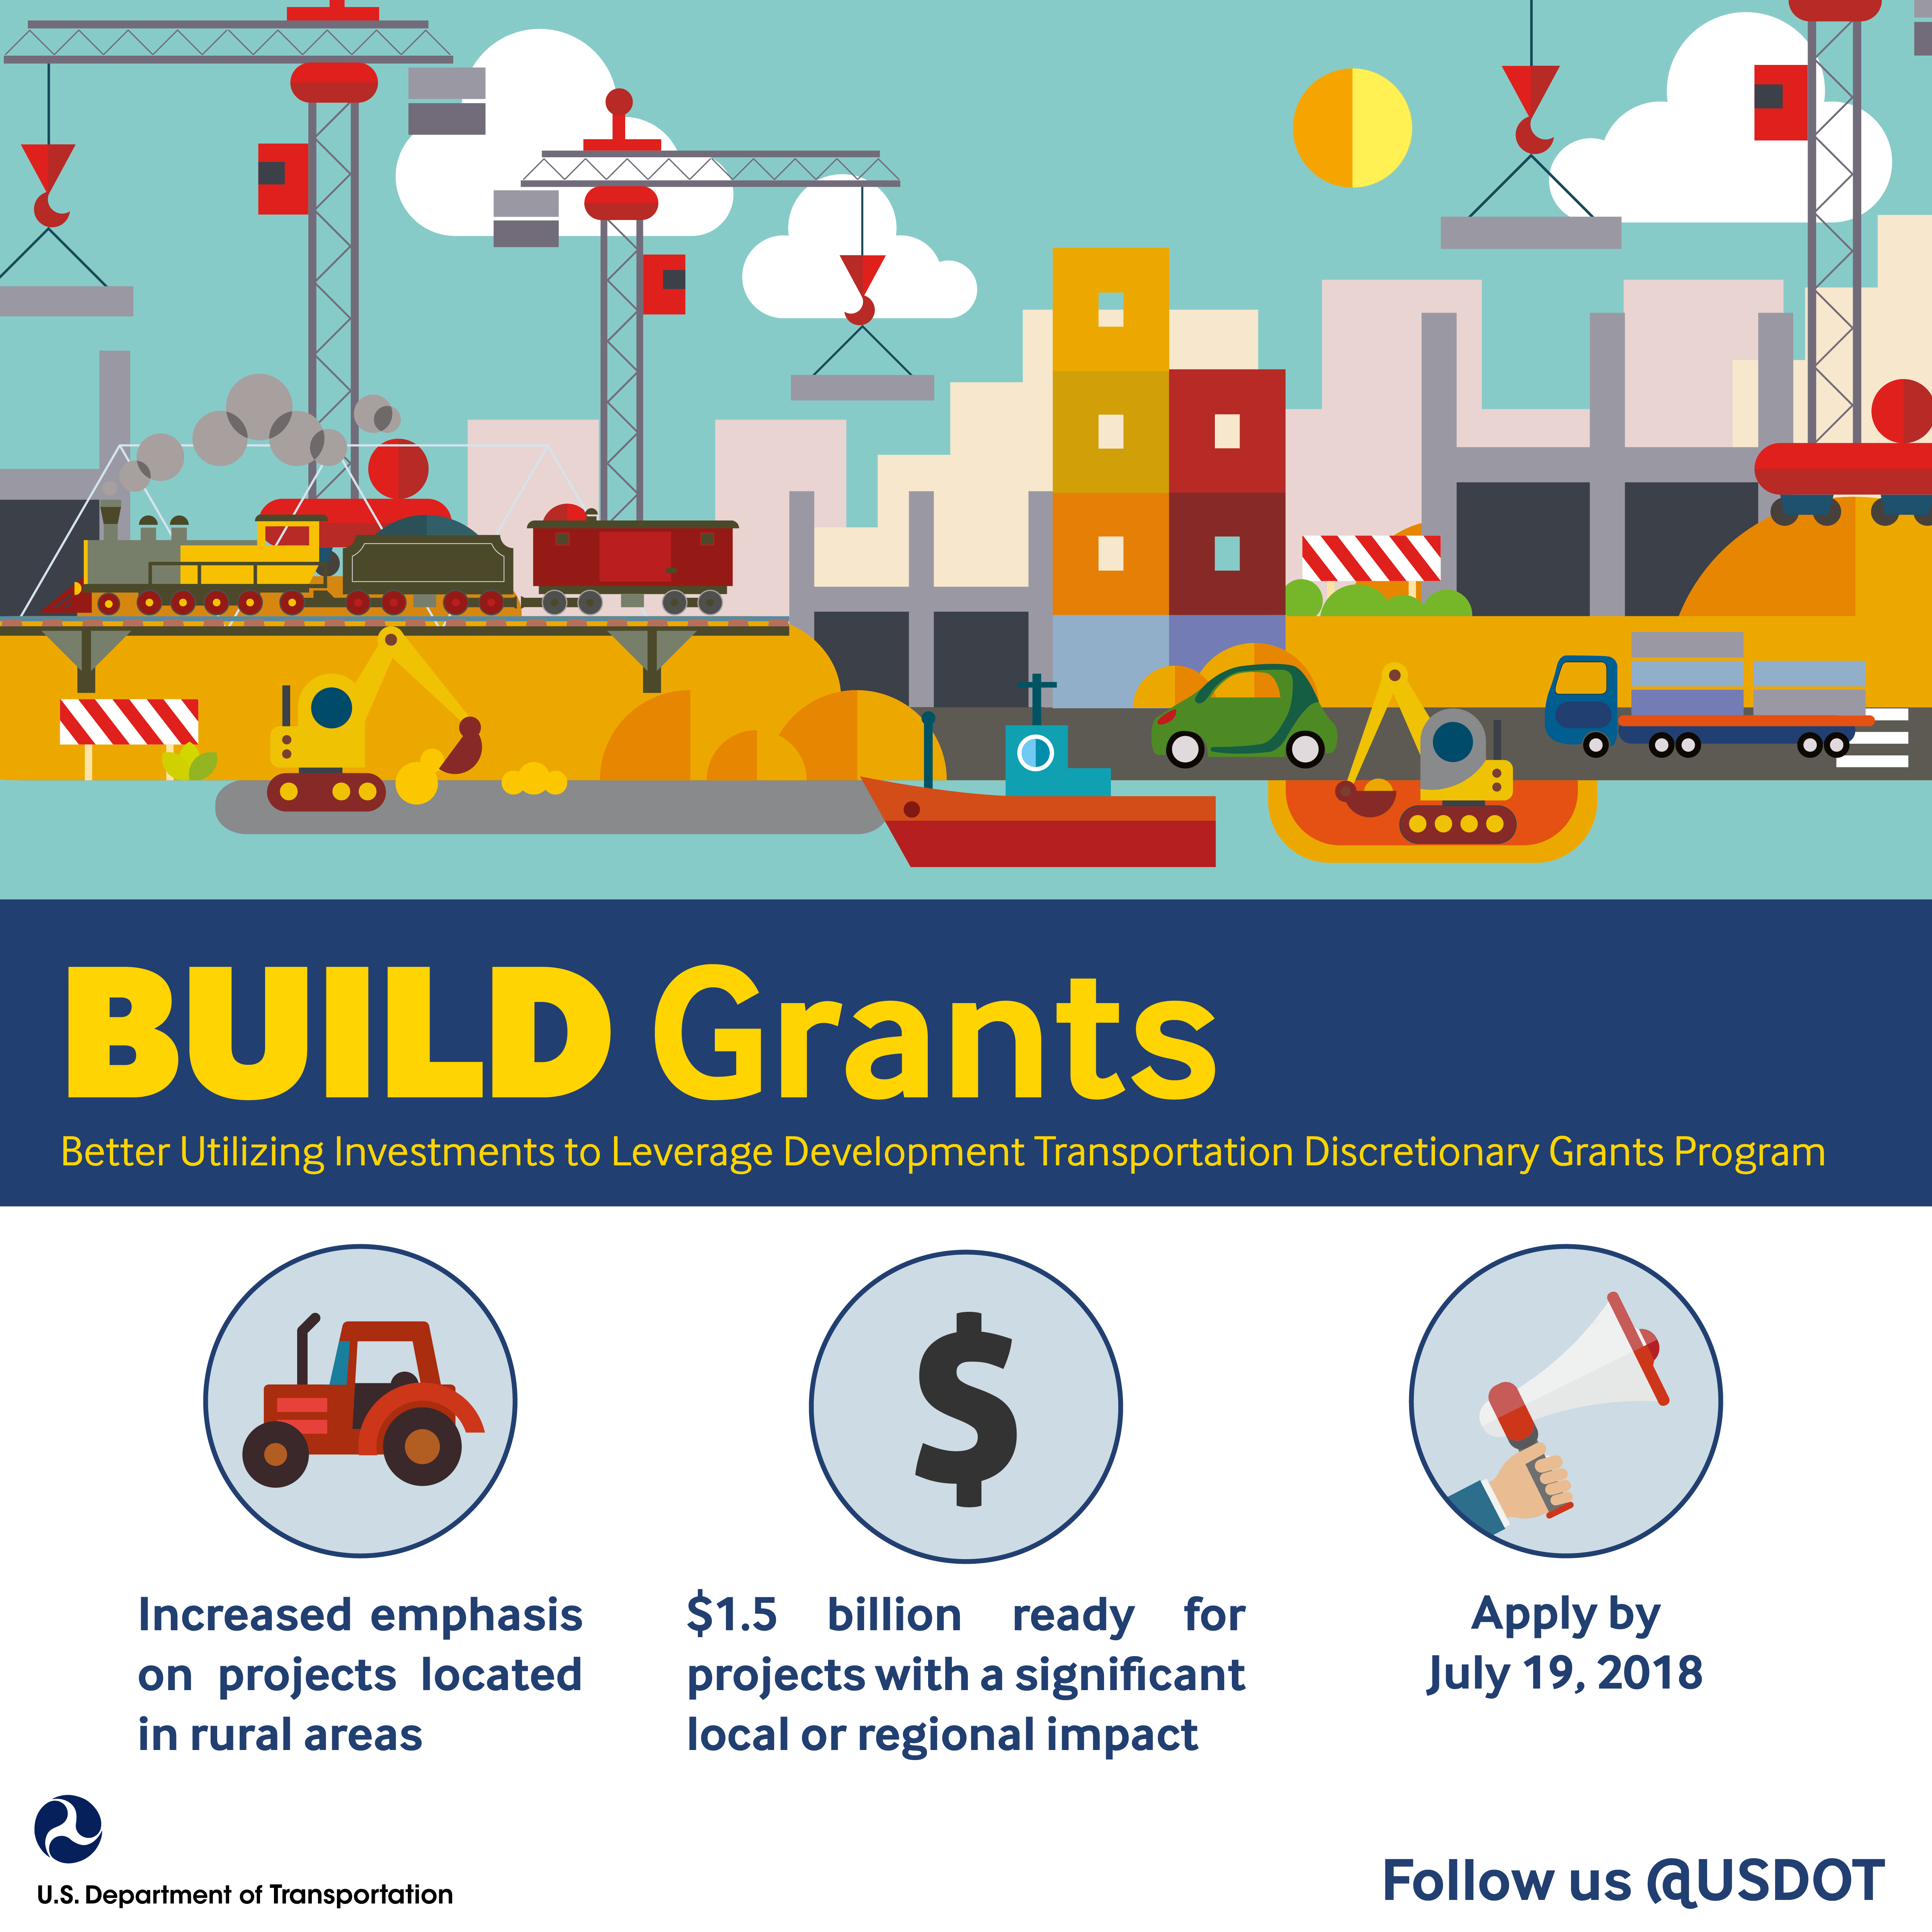 BUILD Grants - U.S. Department of Transportation